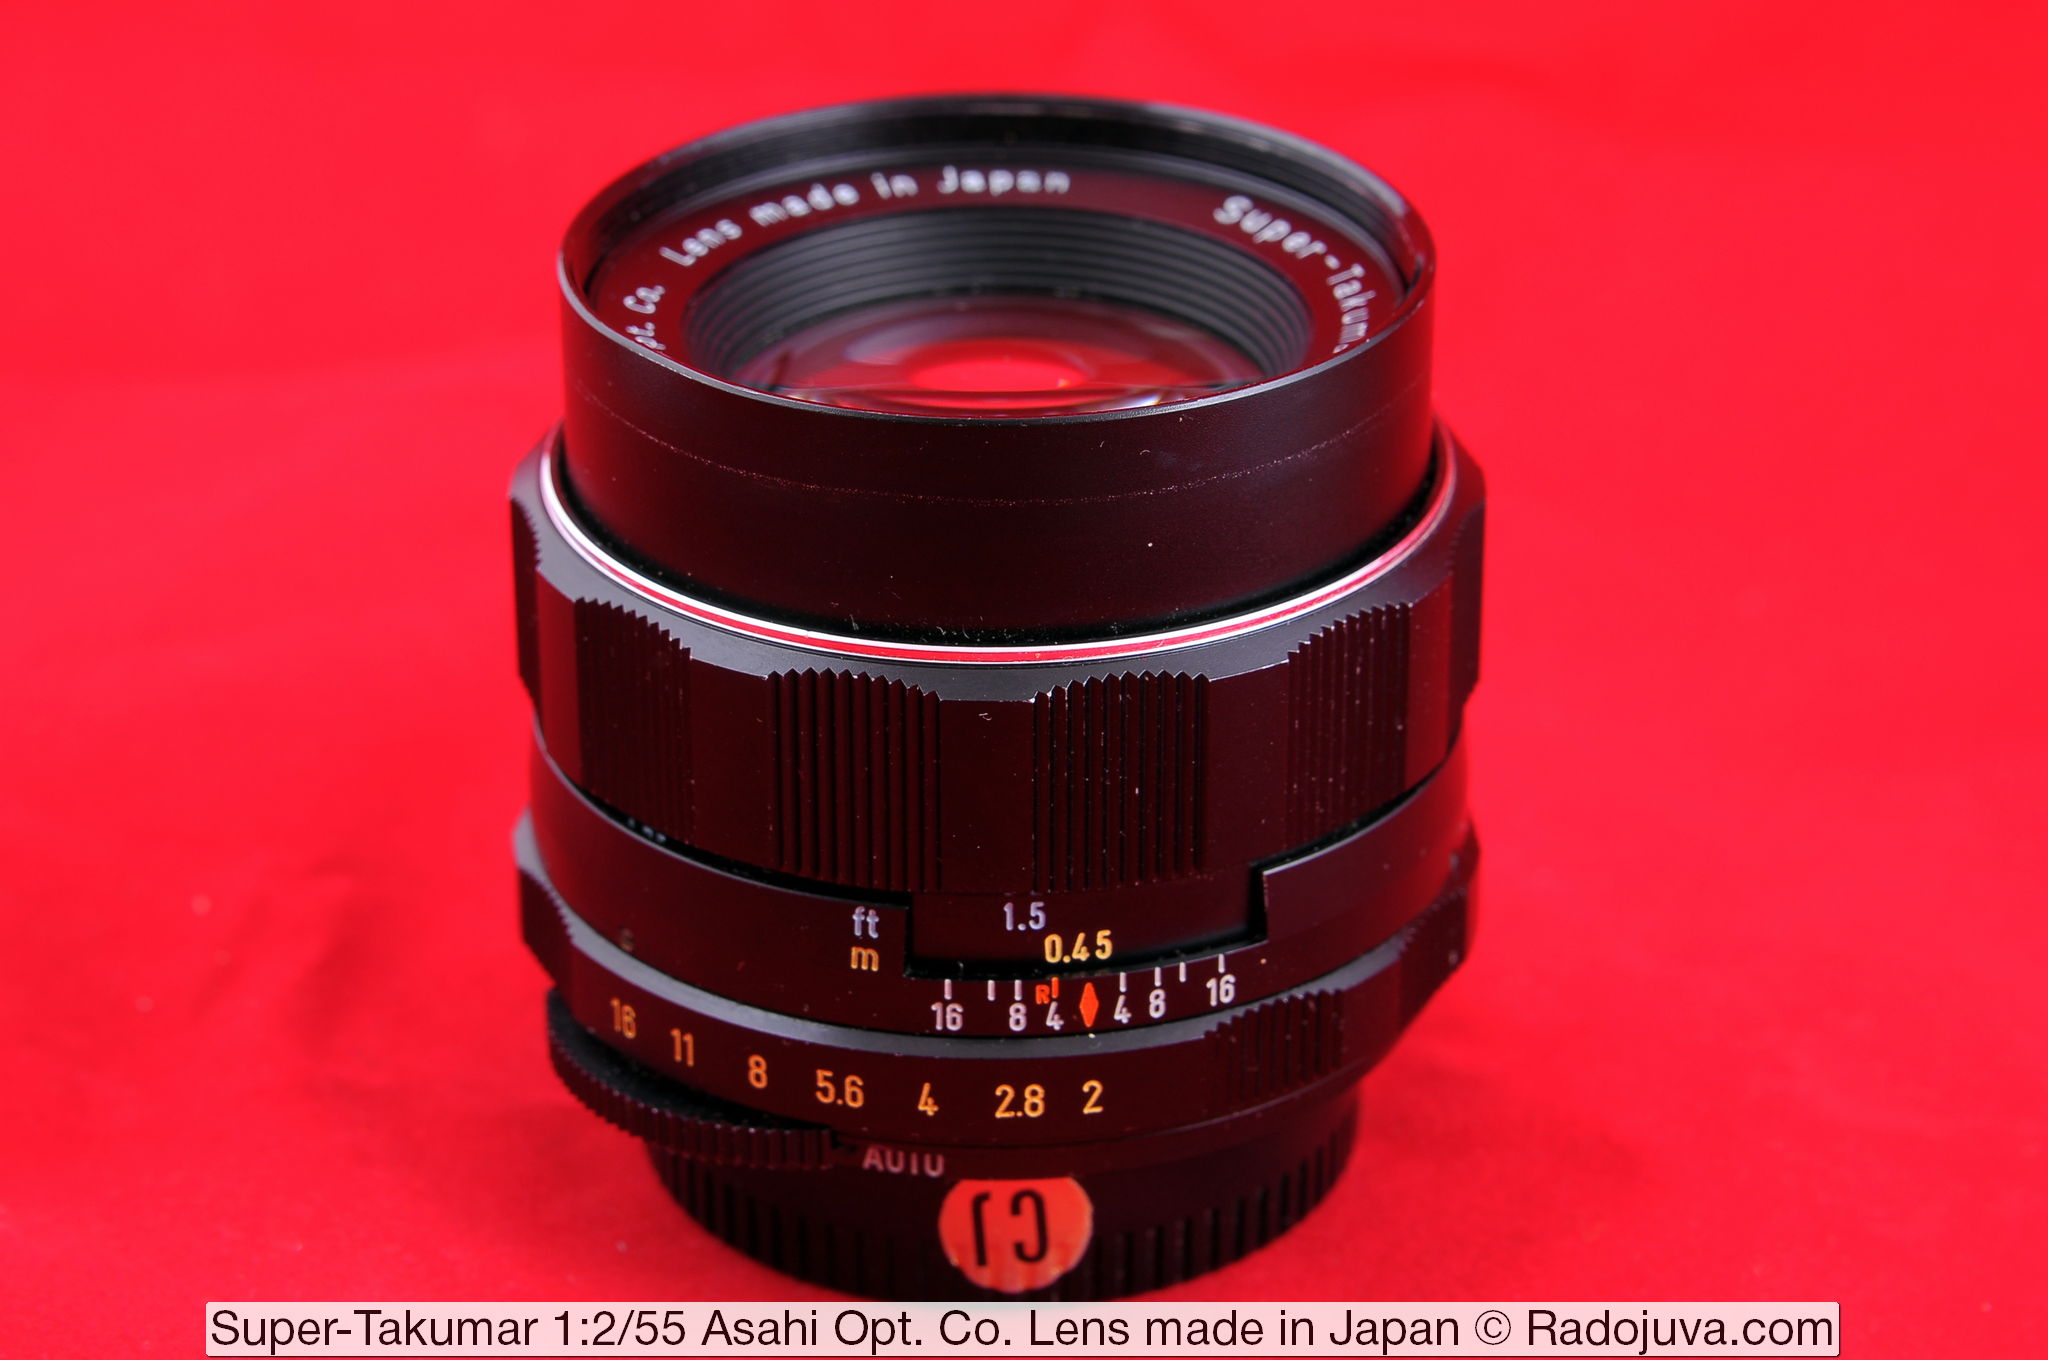 Super-Takumar 1: 2/55 Asahi Opt Lens. Co. Lens made in japan